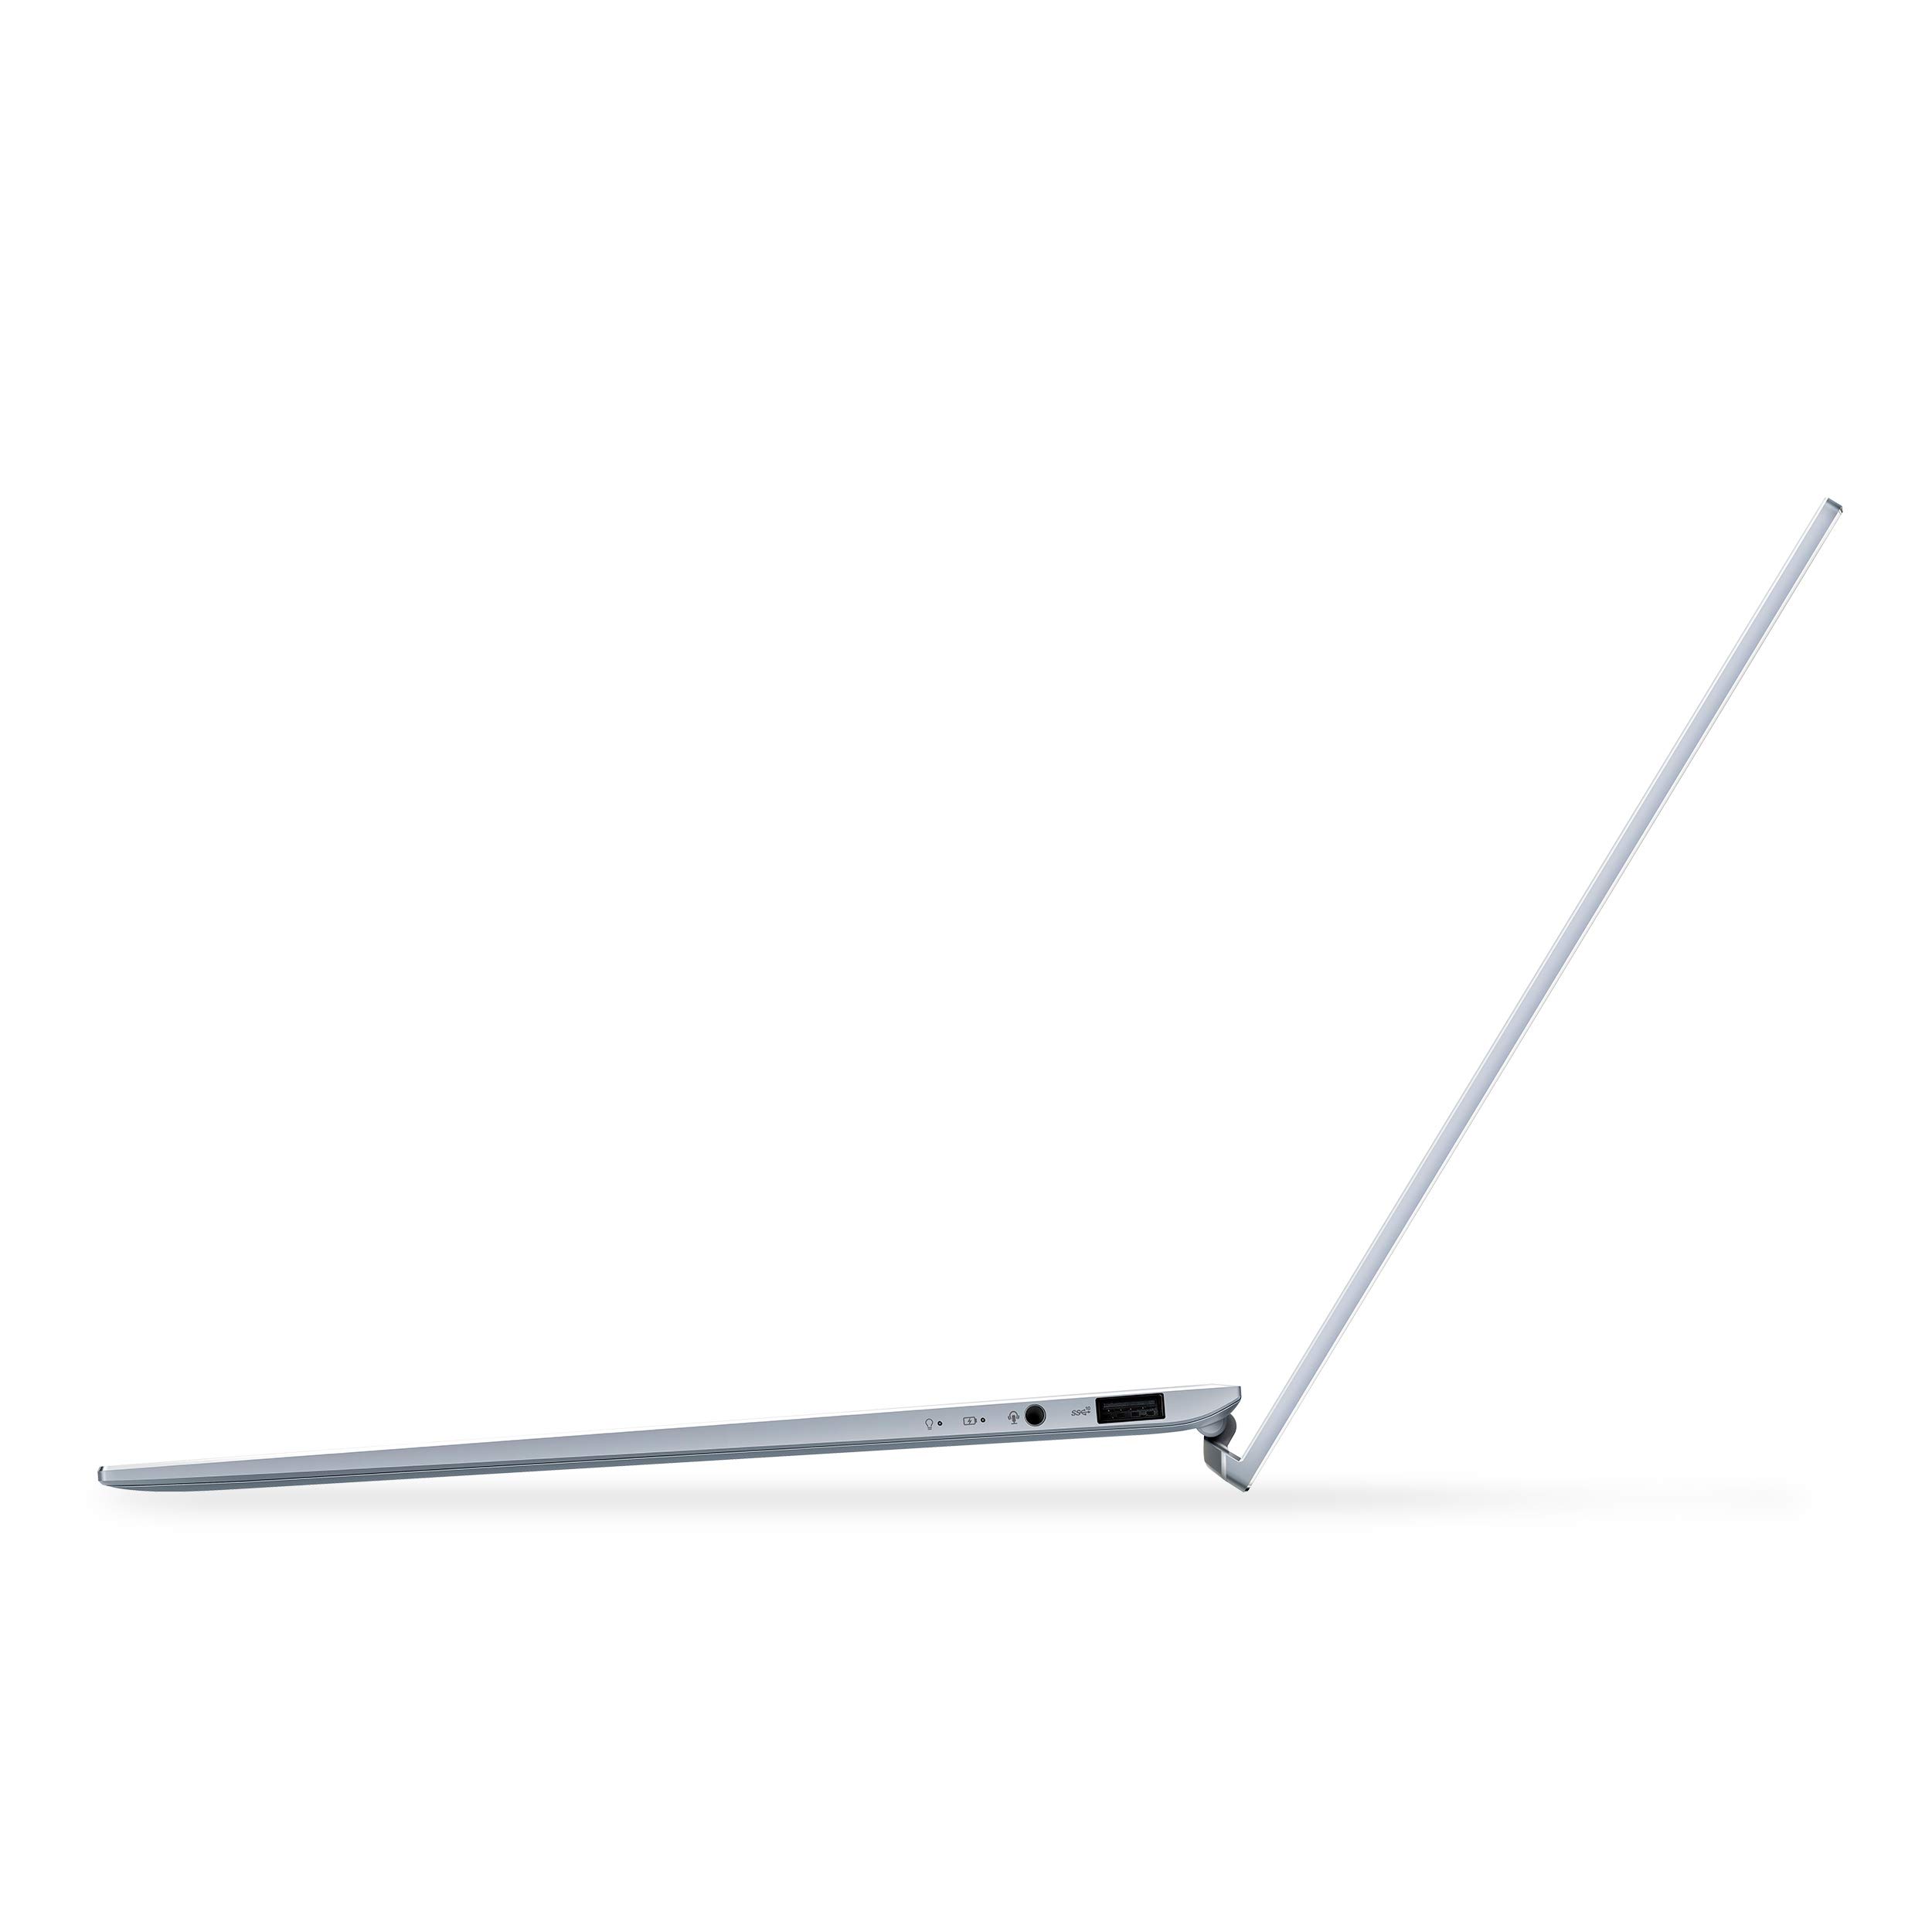 ASUS ZenBook S13 Ultra Thin & Light Laptop 13.9” FHD, Intel Core i7-8565U CPU, GeForce MX150, 8GB RAM, 512GB PCIe SSD, Windows 10 Pro, Silver Blue, UX392FN-XS71